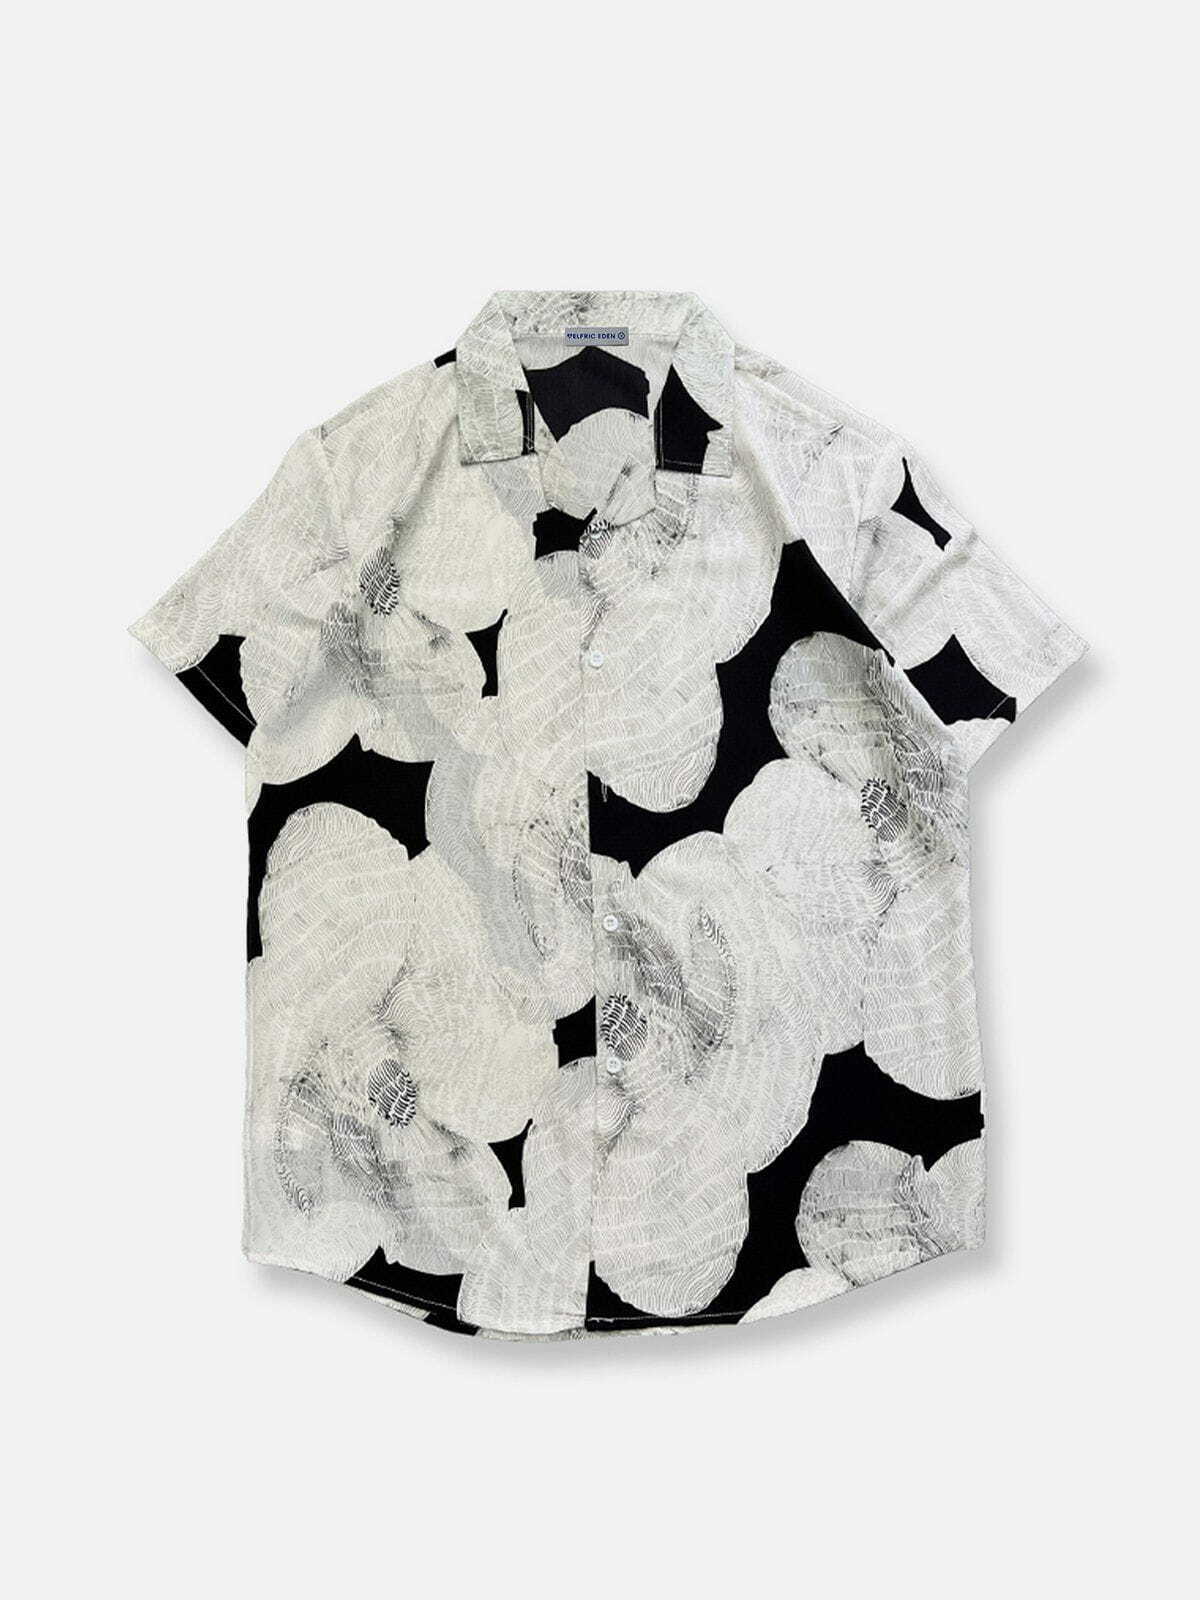 vibrant flower print shirt   youthful & trendy streetwear 5313